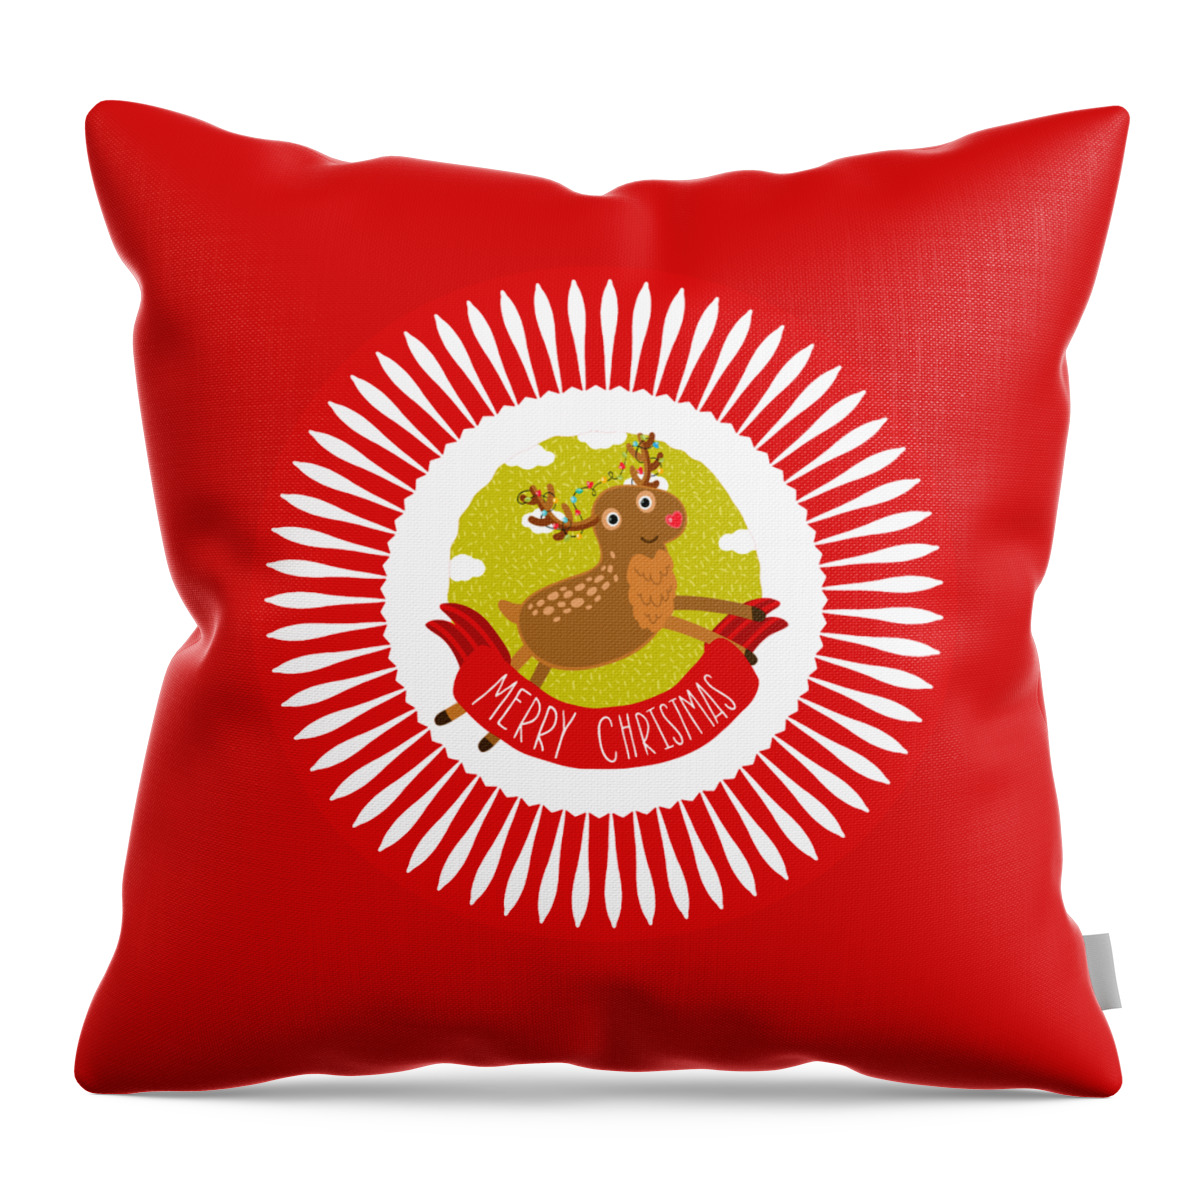 Digital Art Throw Pillow featuring the digital art Merry Christmas Reindeer by Kaye Menner by Kaye Menner